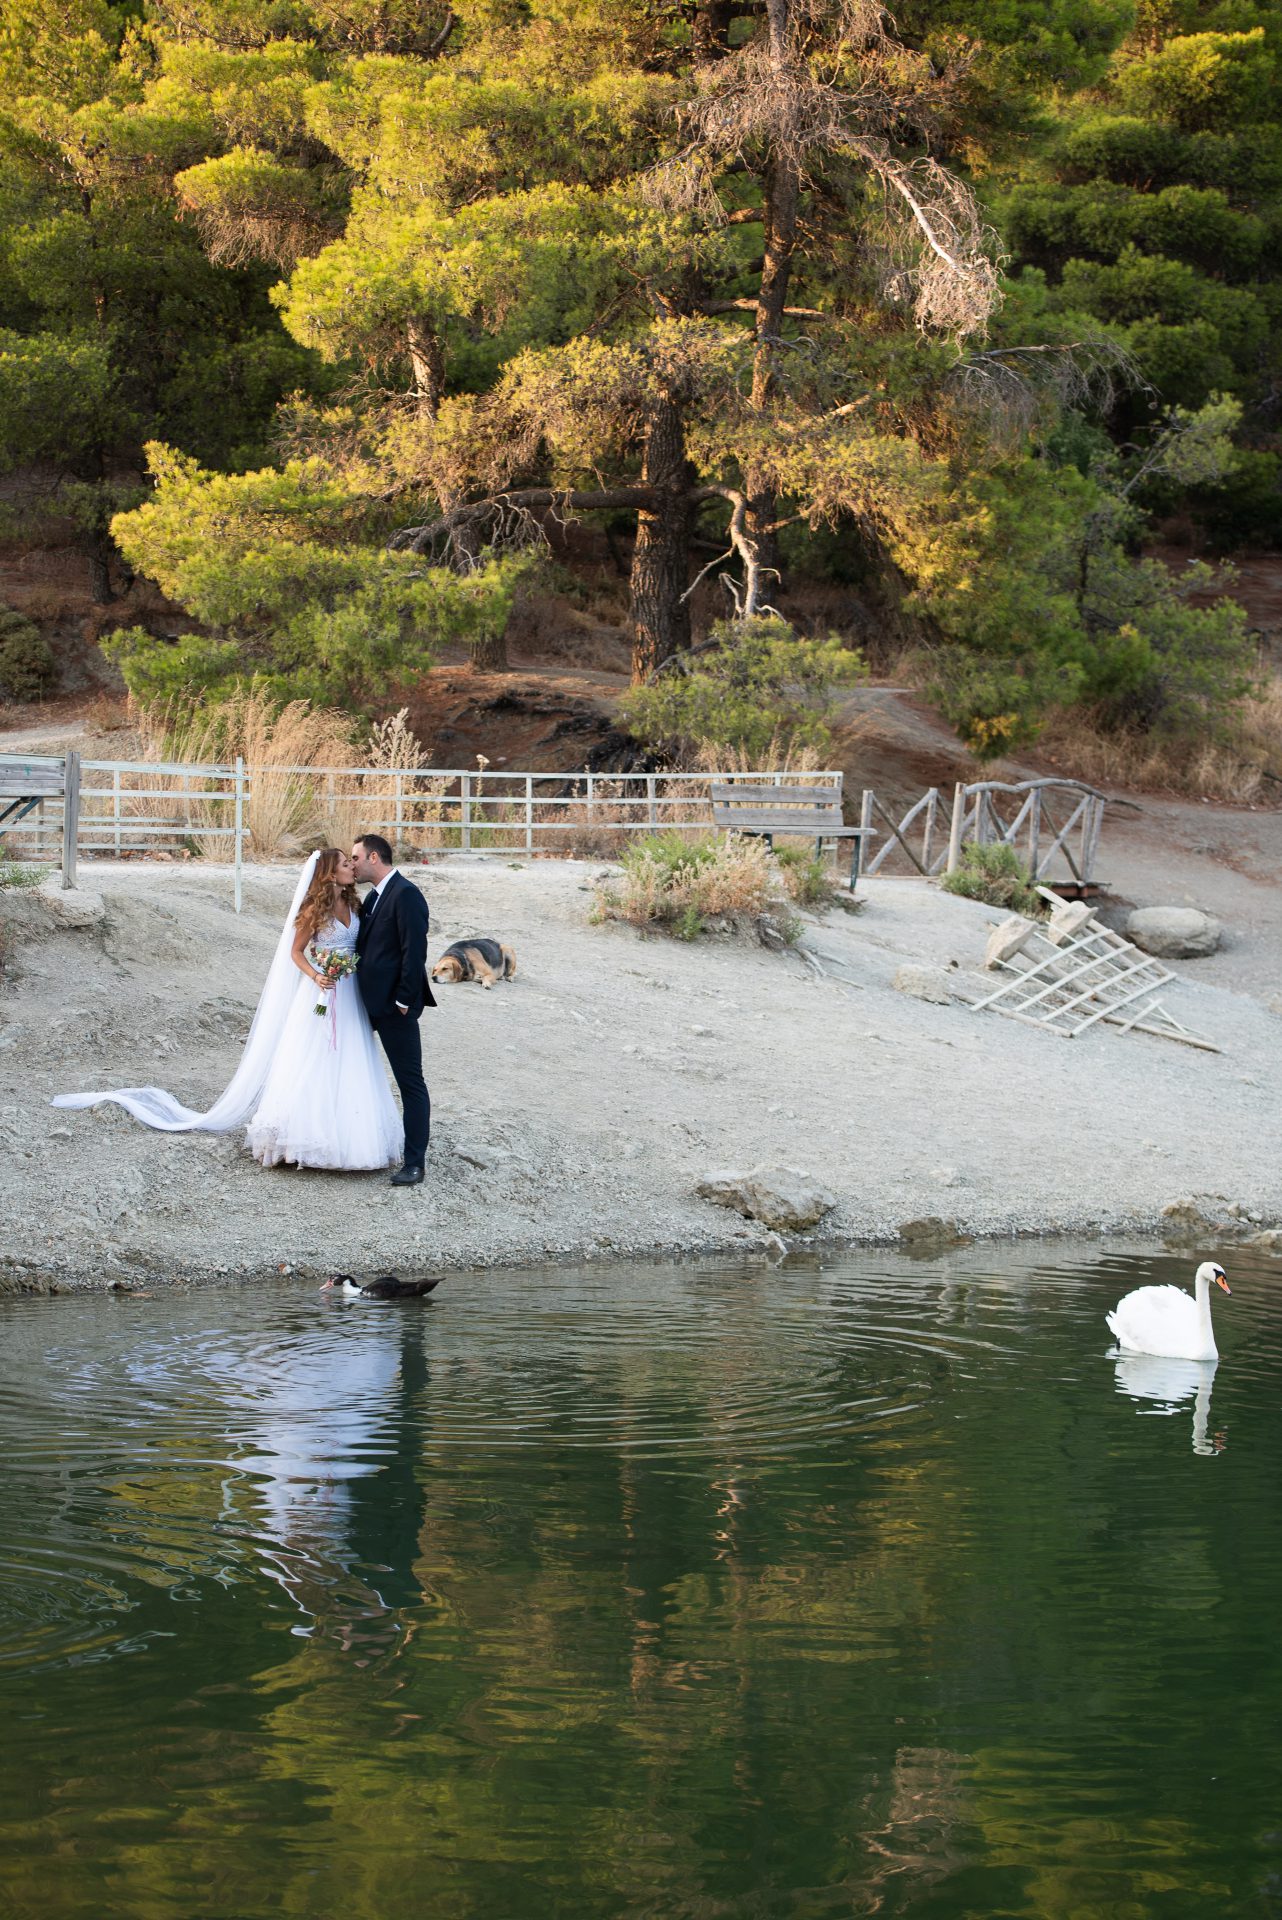 Next day φωτογράφηση γάμου σε ένα ροματικό ζευγάρι στην λίμνη Μπελέτσι